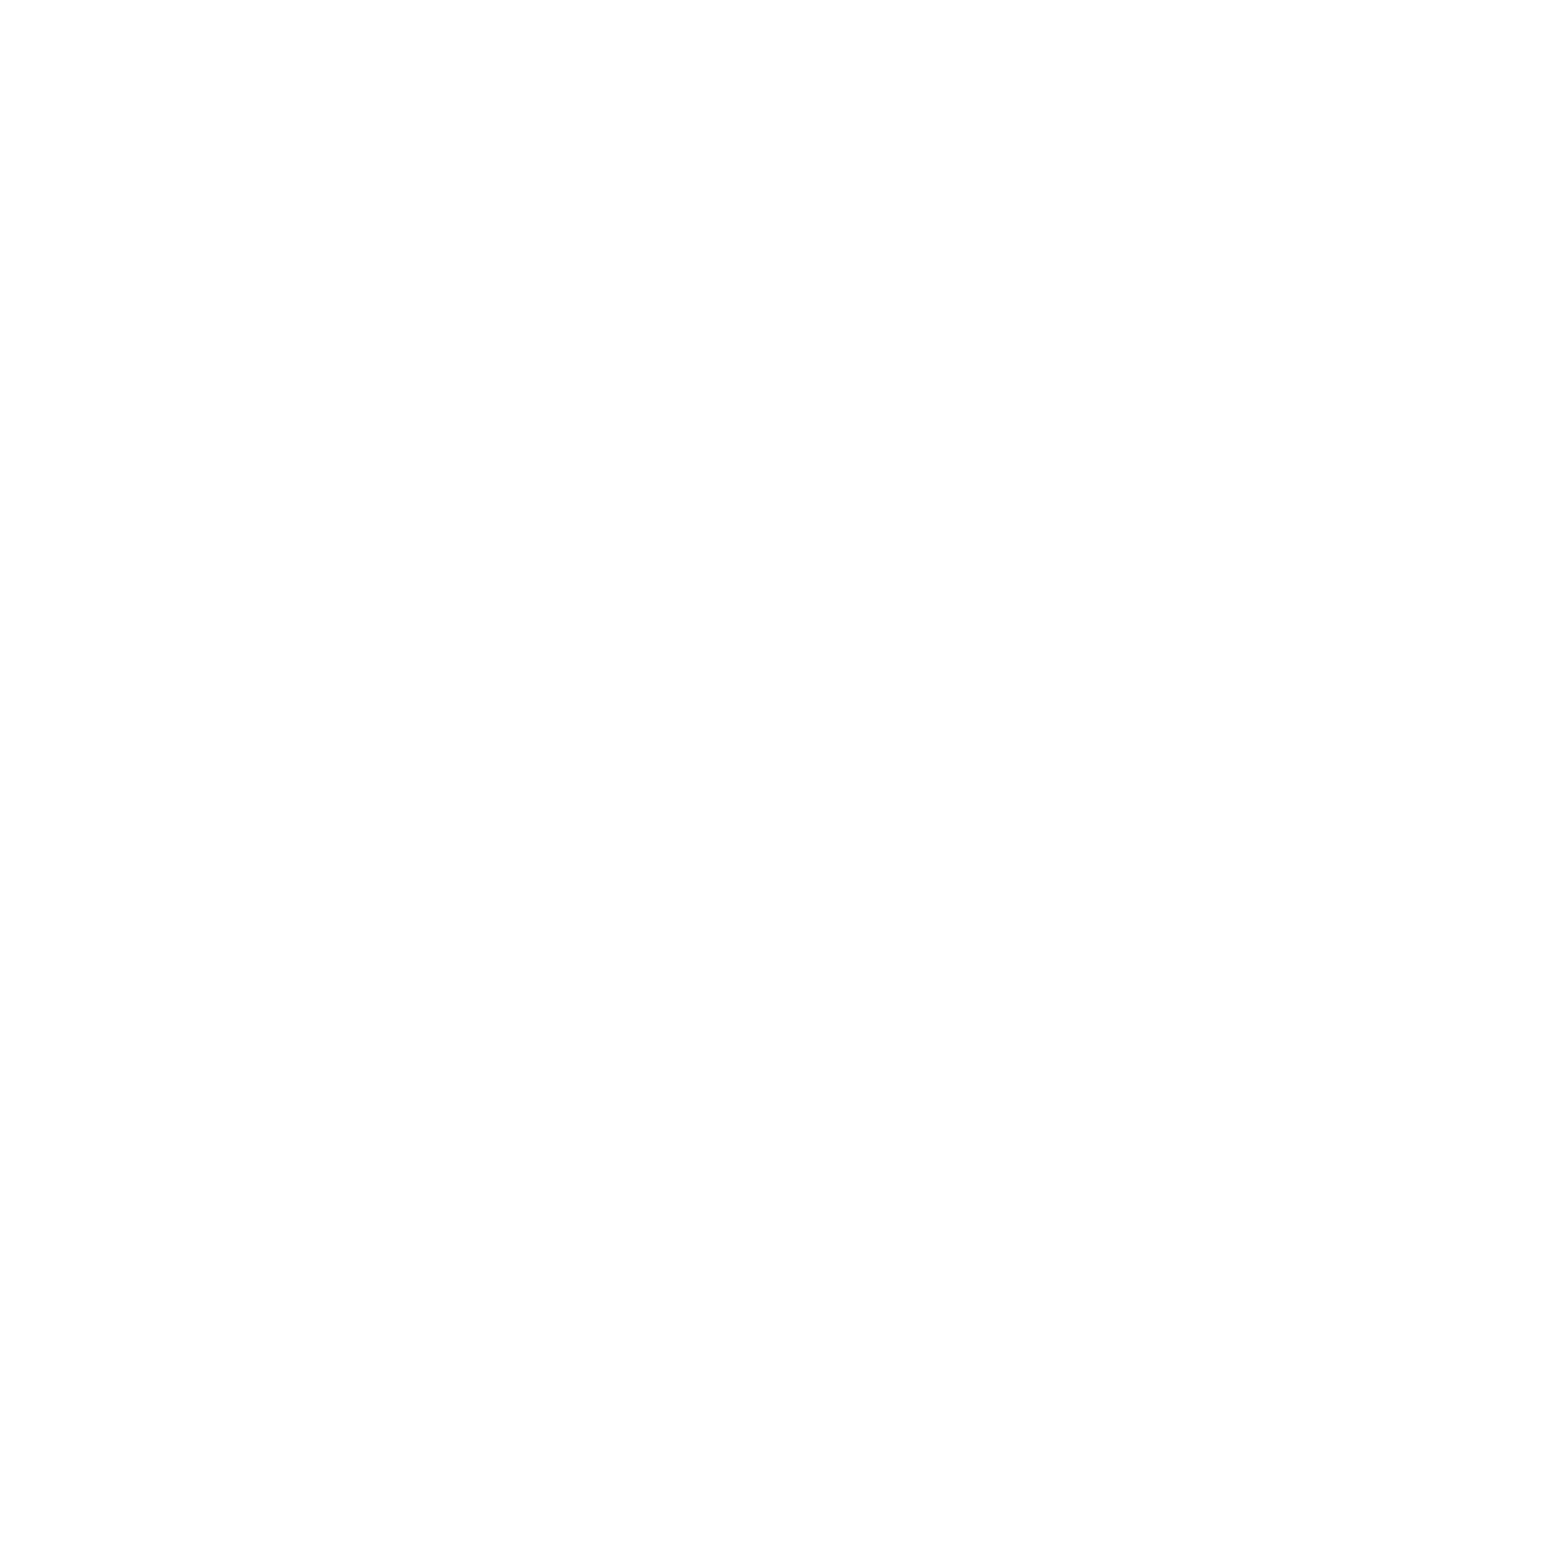 Paysign logo for dark backgrounds (transparent PNG)